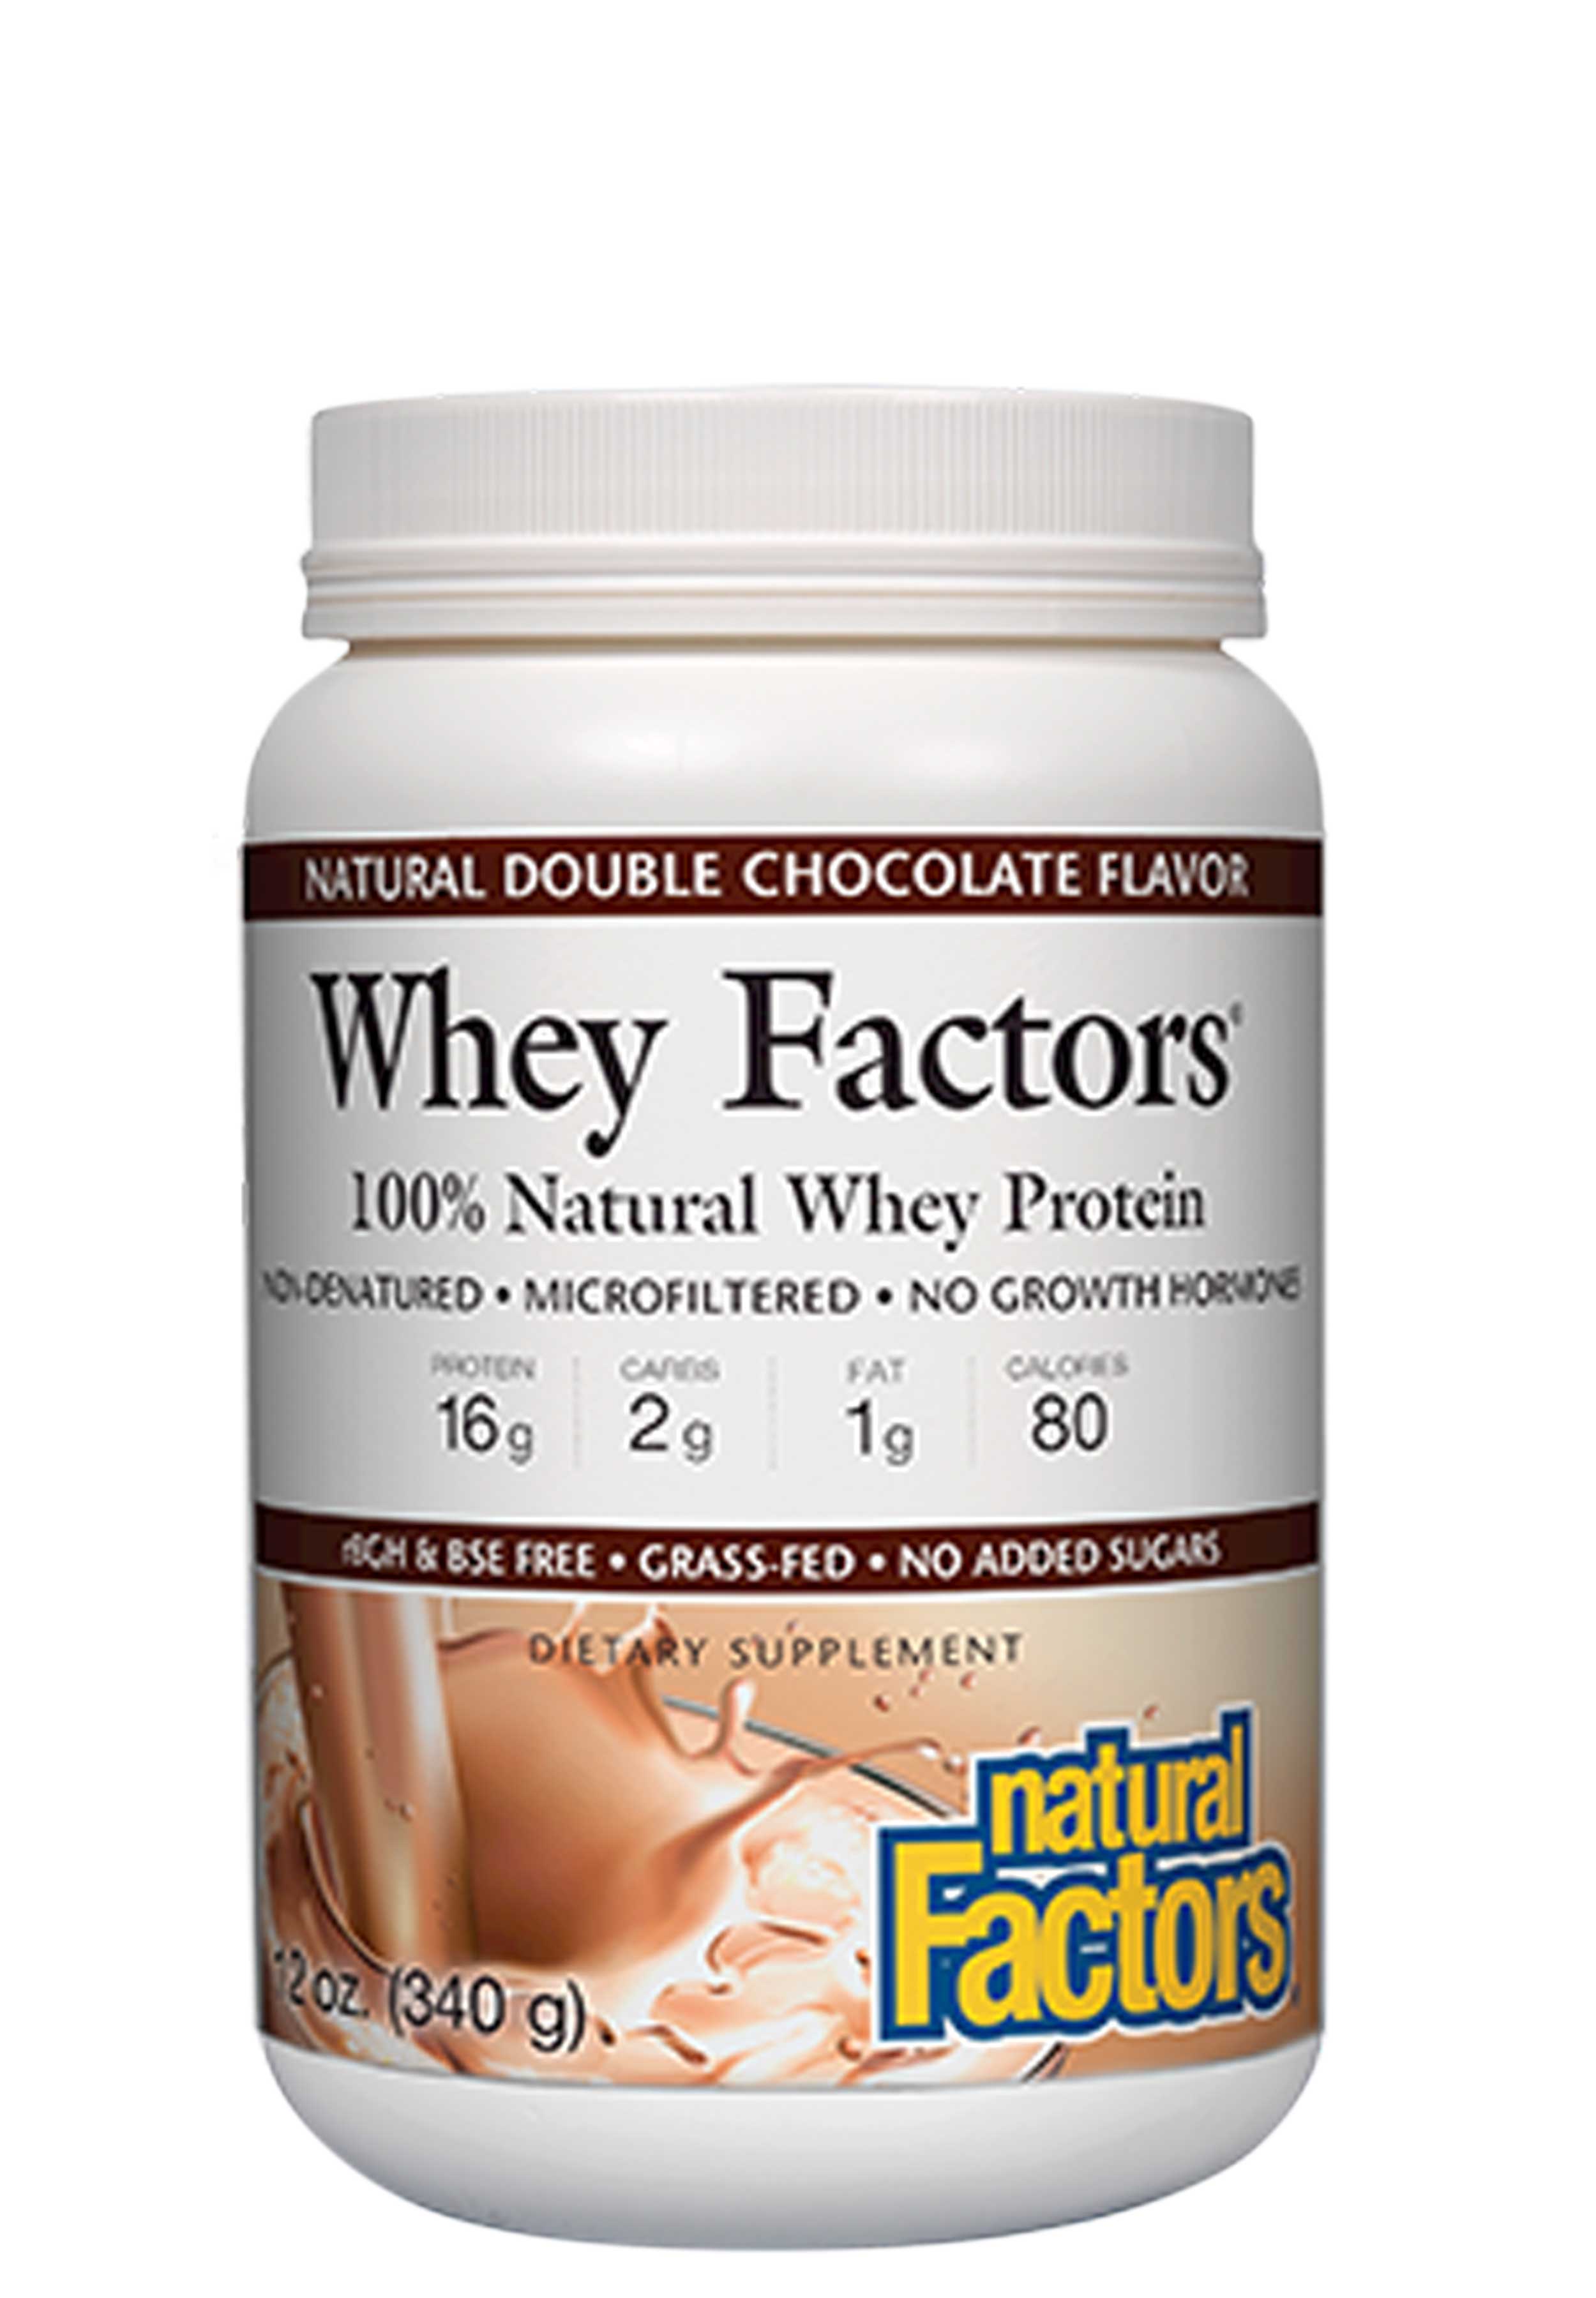 Natural Factors Whey Factors Powder Mix Chocolate Flavor 340g